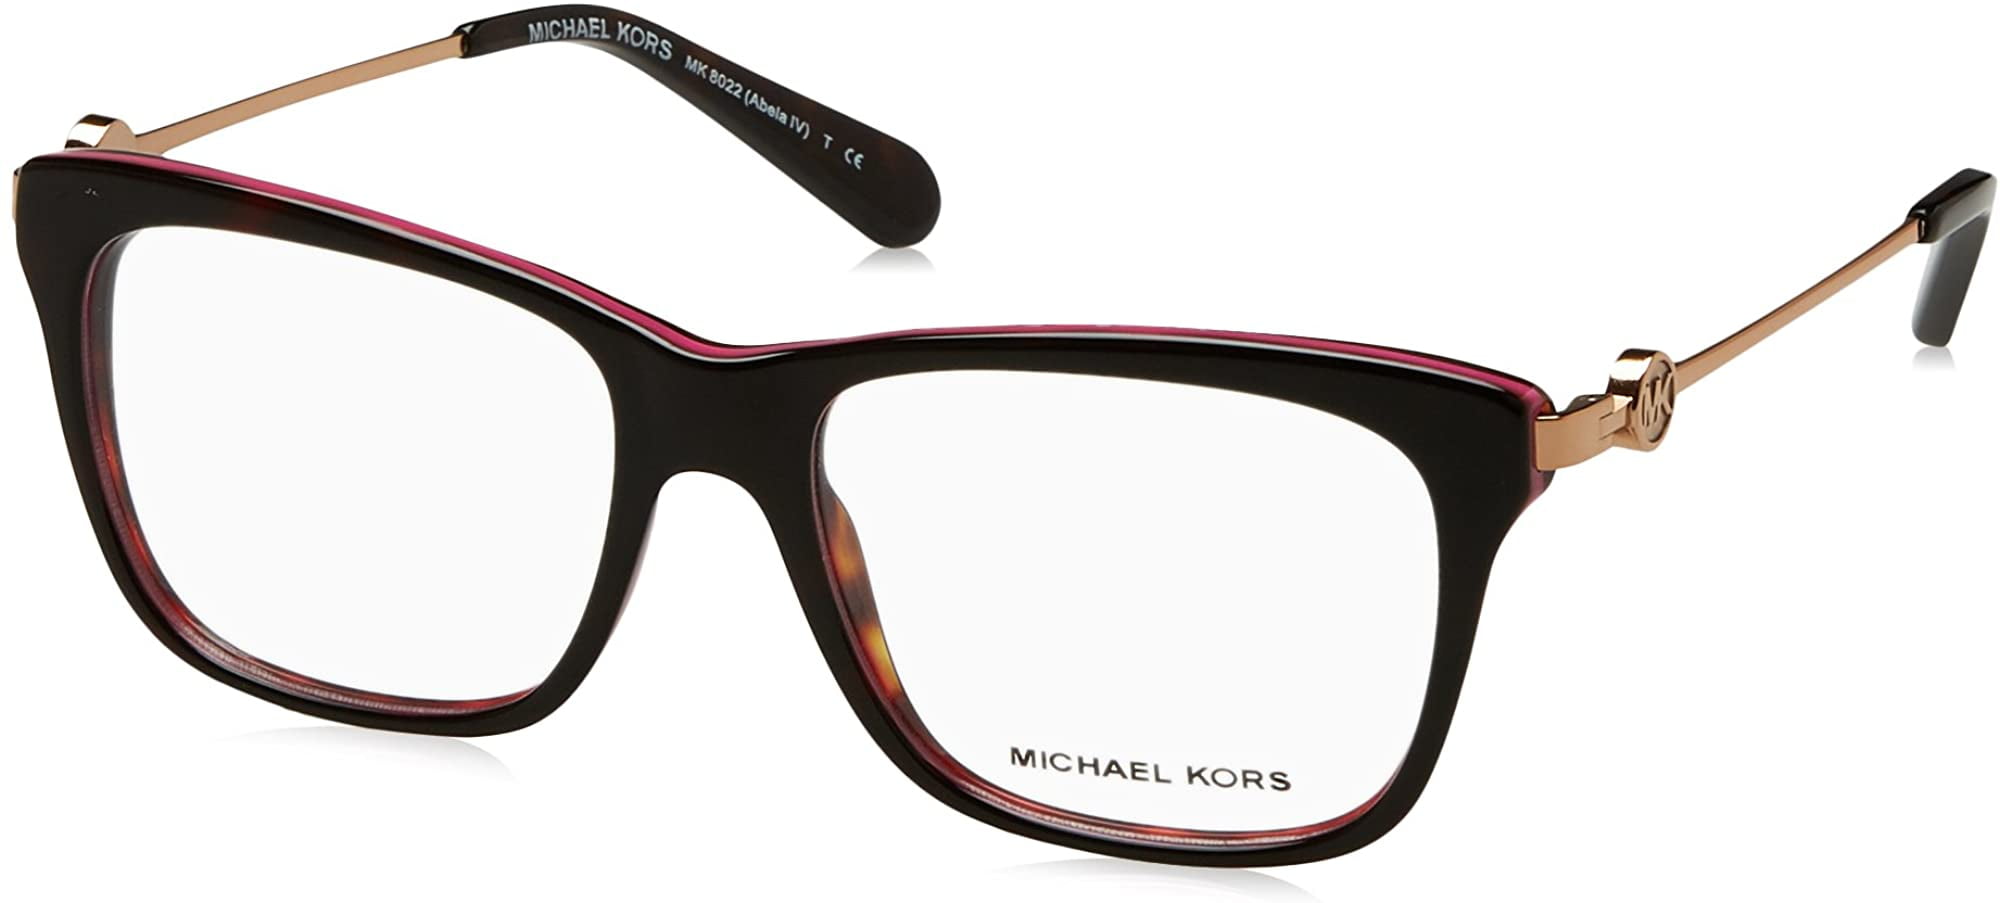 Michael Kors - Eye Glasses Walmart Canada